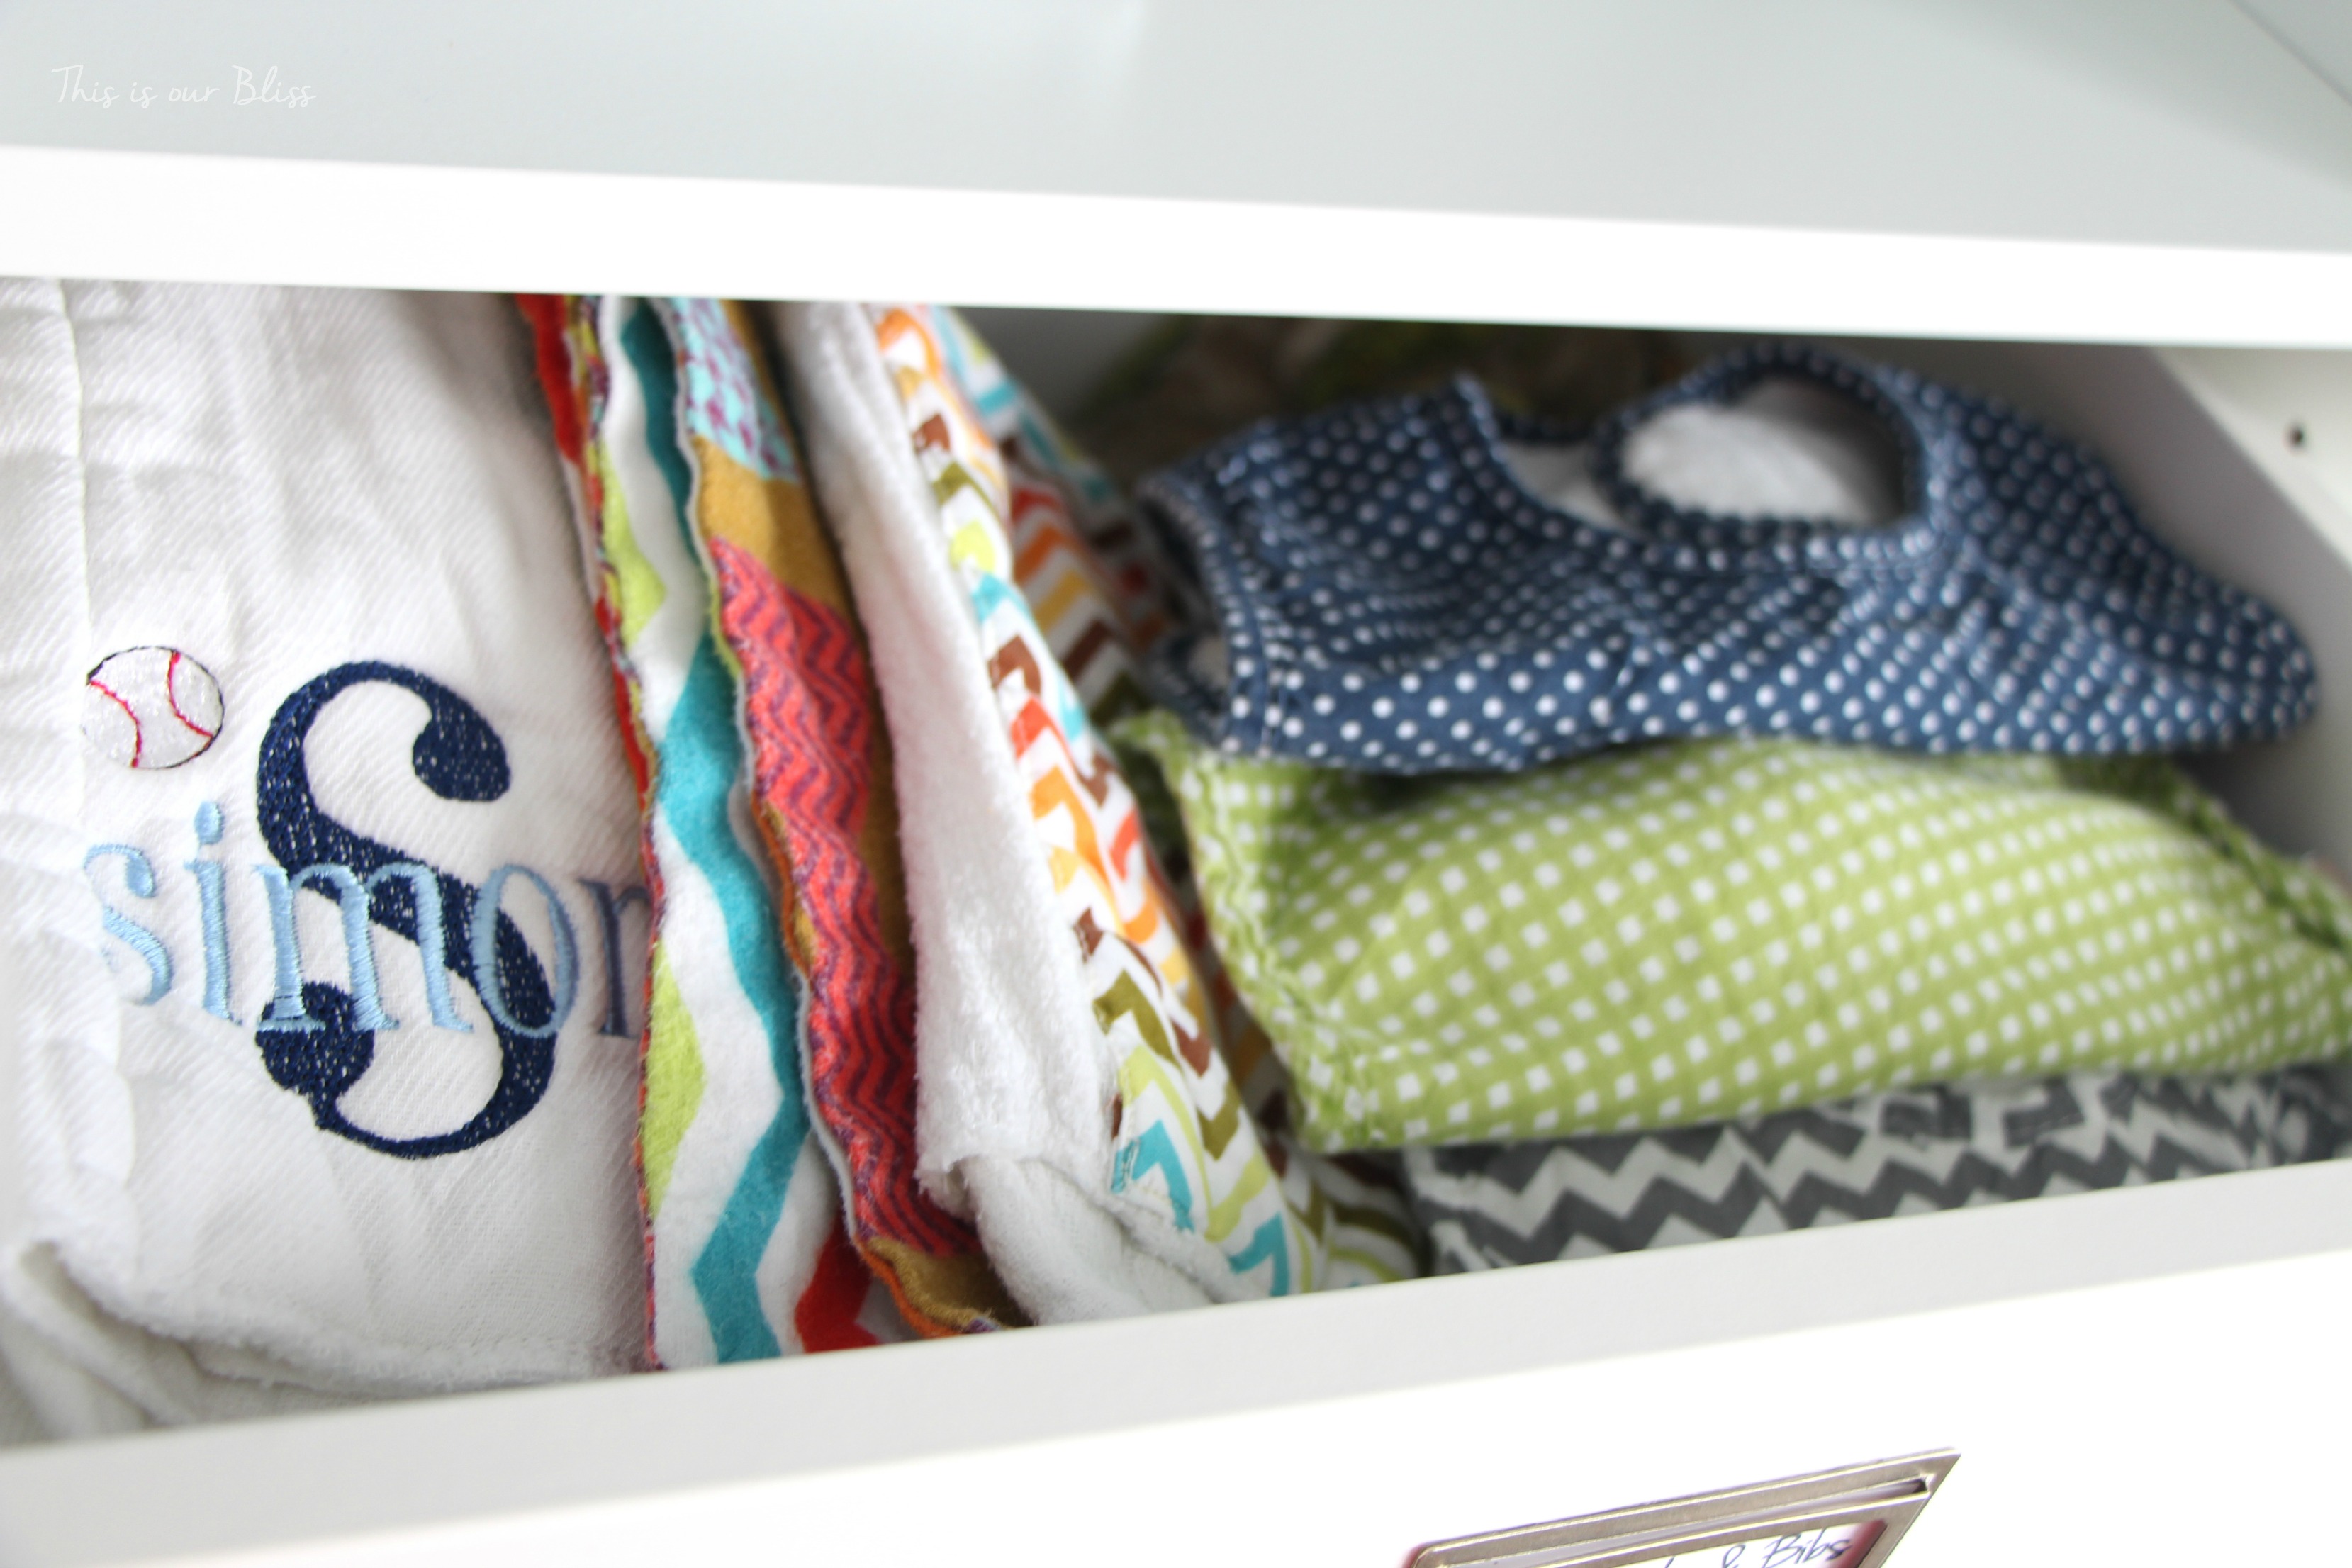 nursery closet details - accessories + labels - closet drawers - burp cloths & bibs - IKEA komplement - This is our Bliss